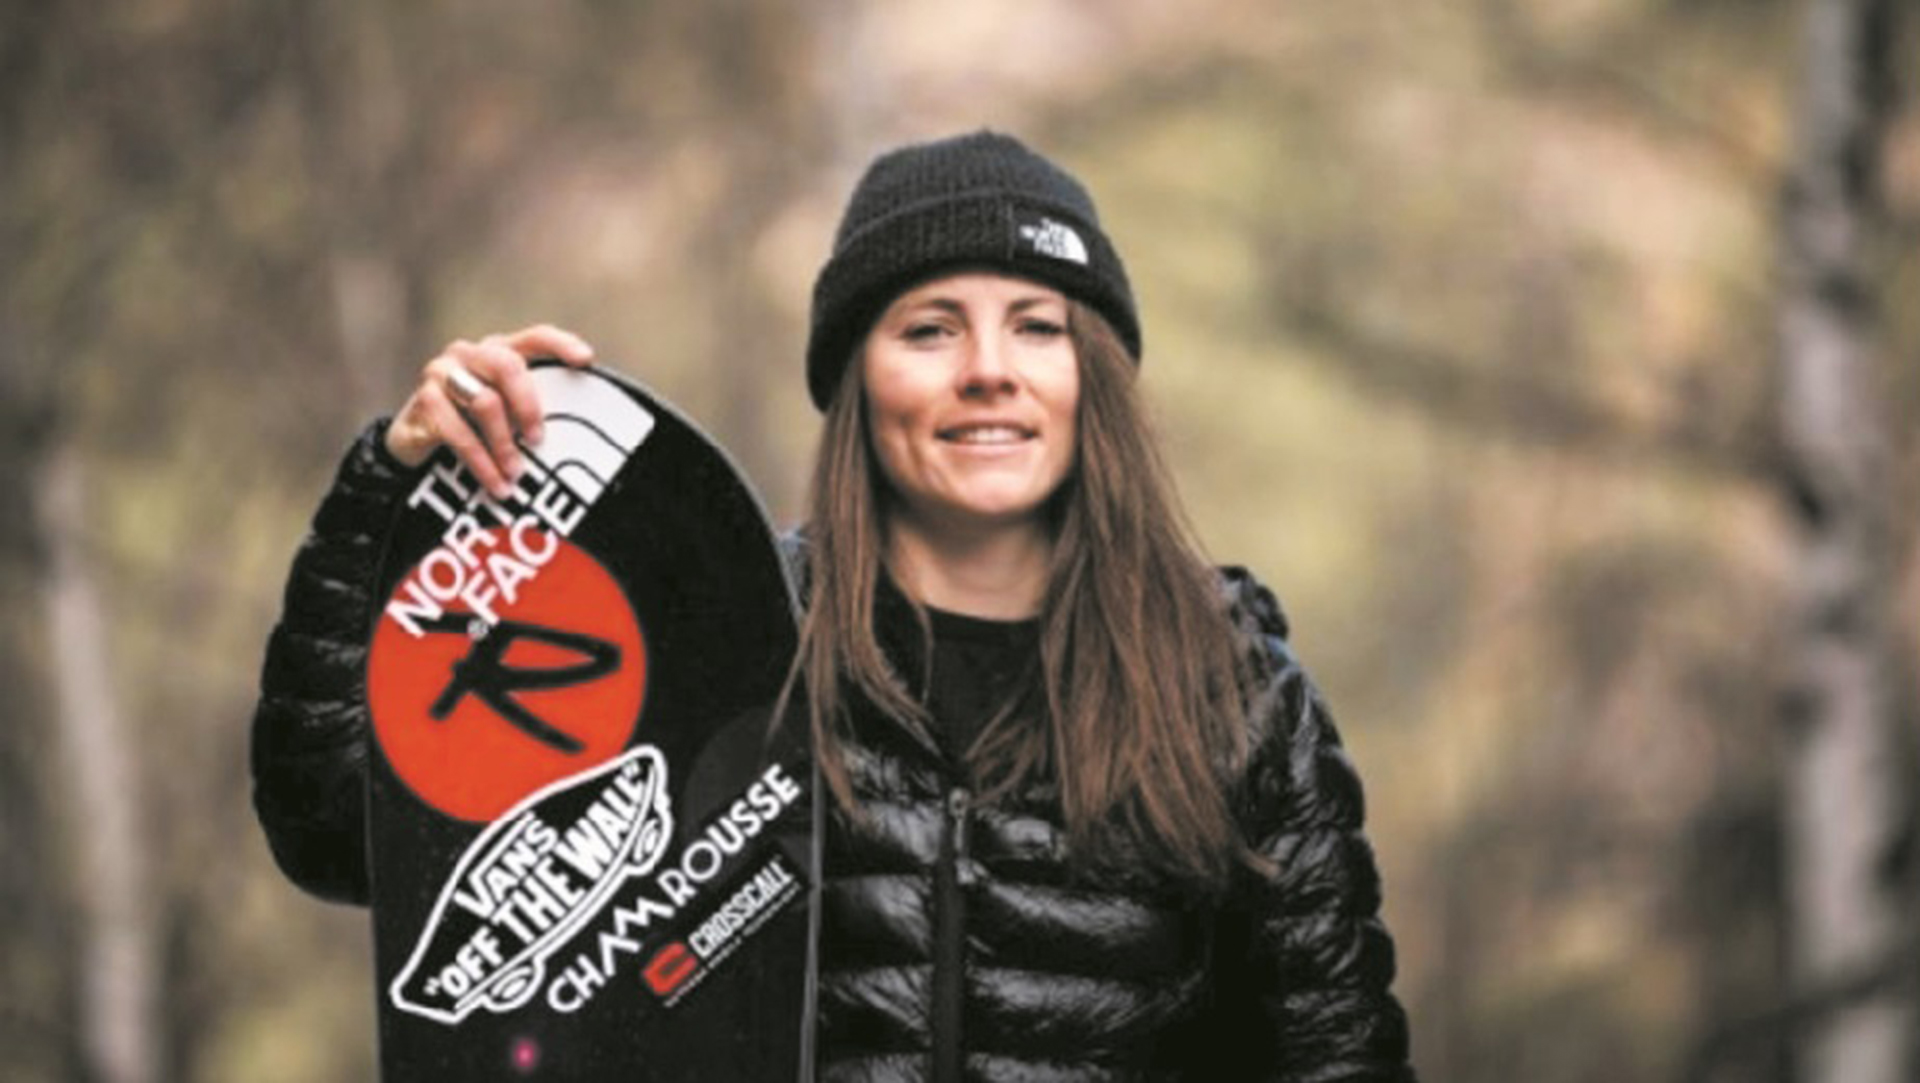 Chamrousse champion marion haerty snowboard freeride championne monde 2017 2019 2020 station montagne ski isère france - © Libération